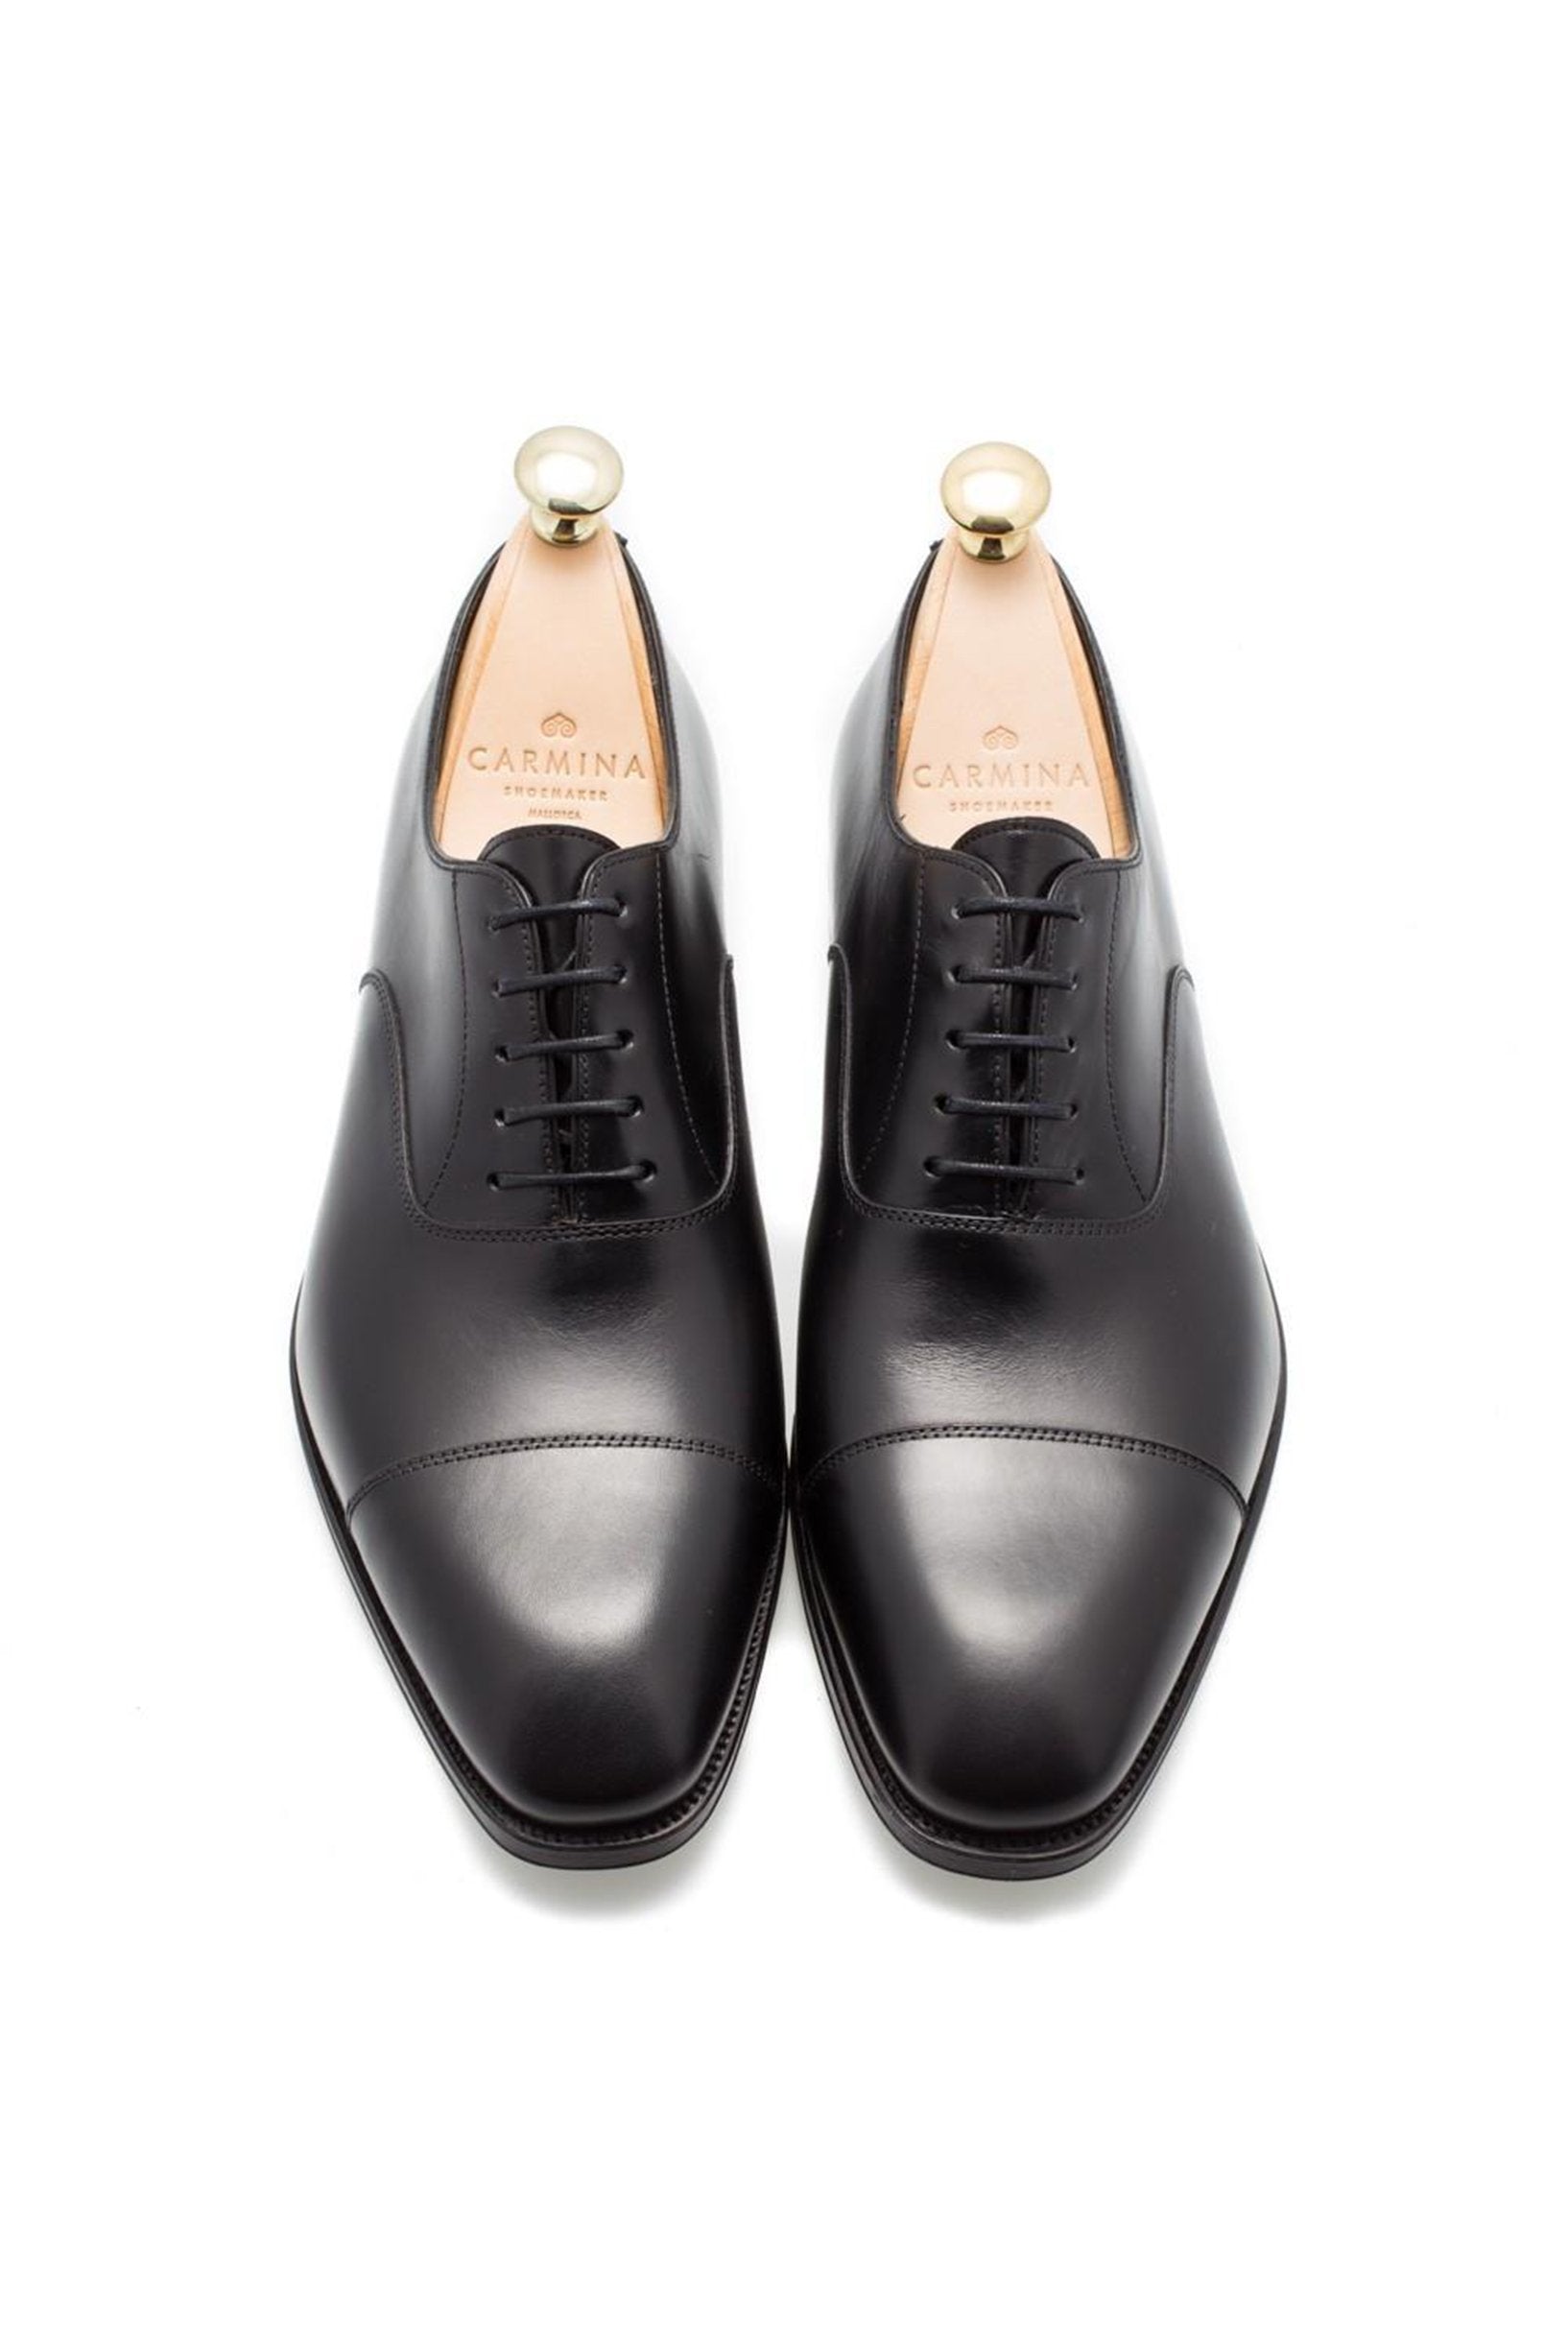 Carmina Rain 732/80386 Black Calf Simple Captoe Shoes